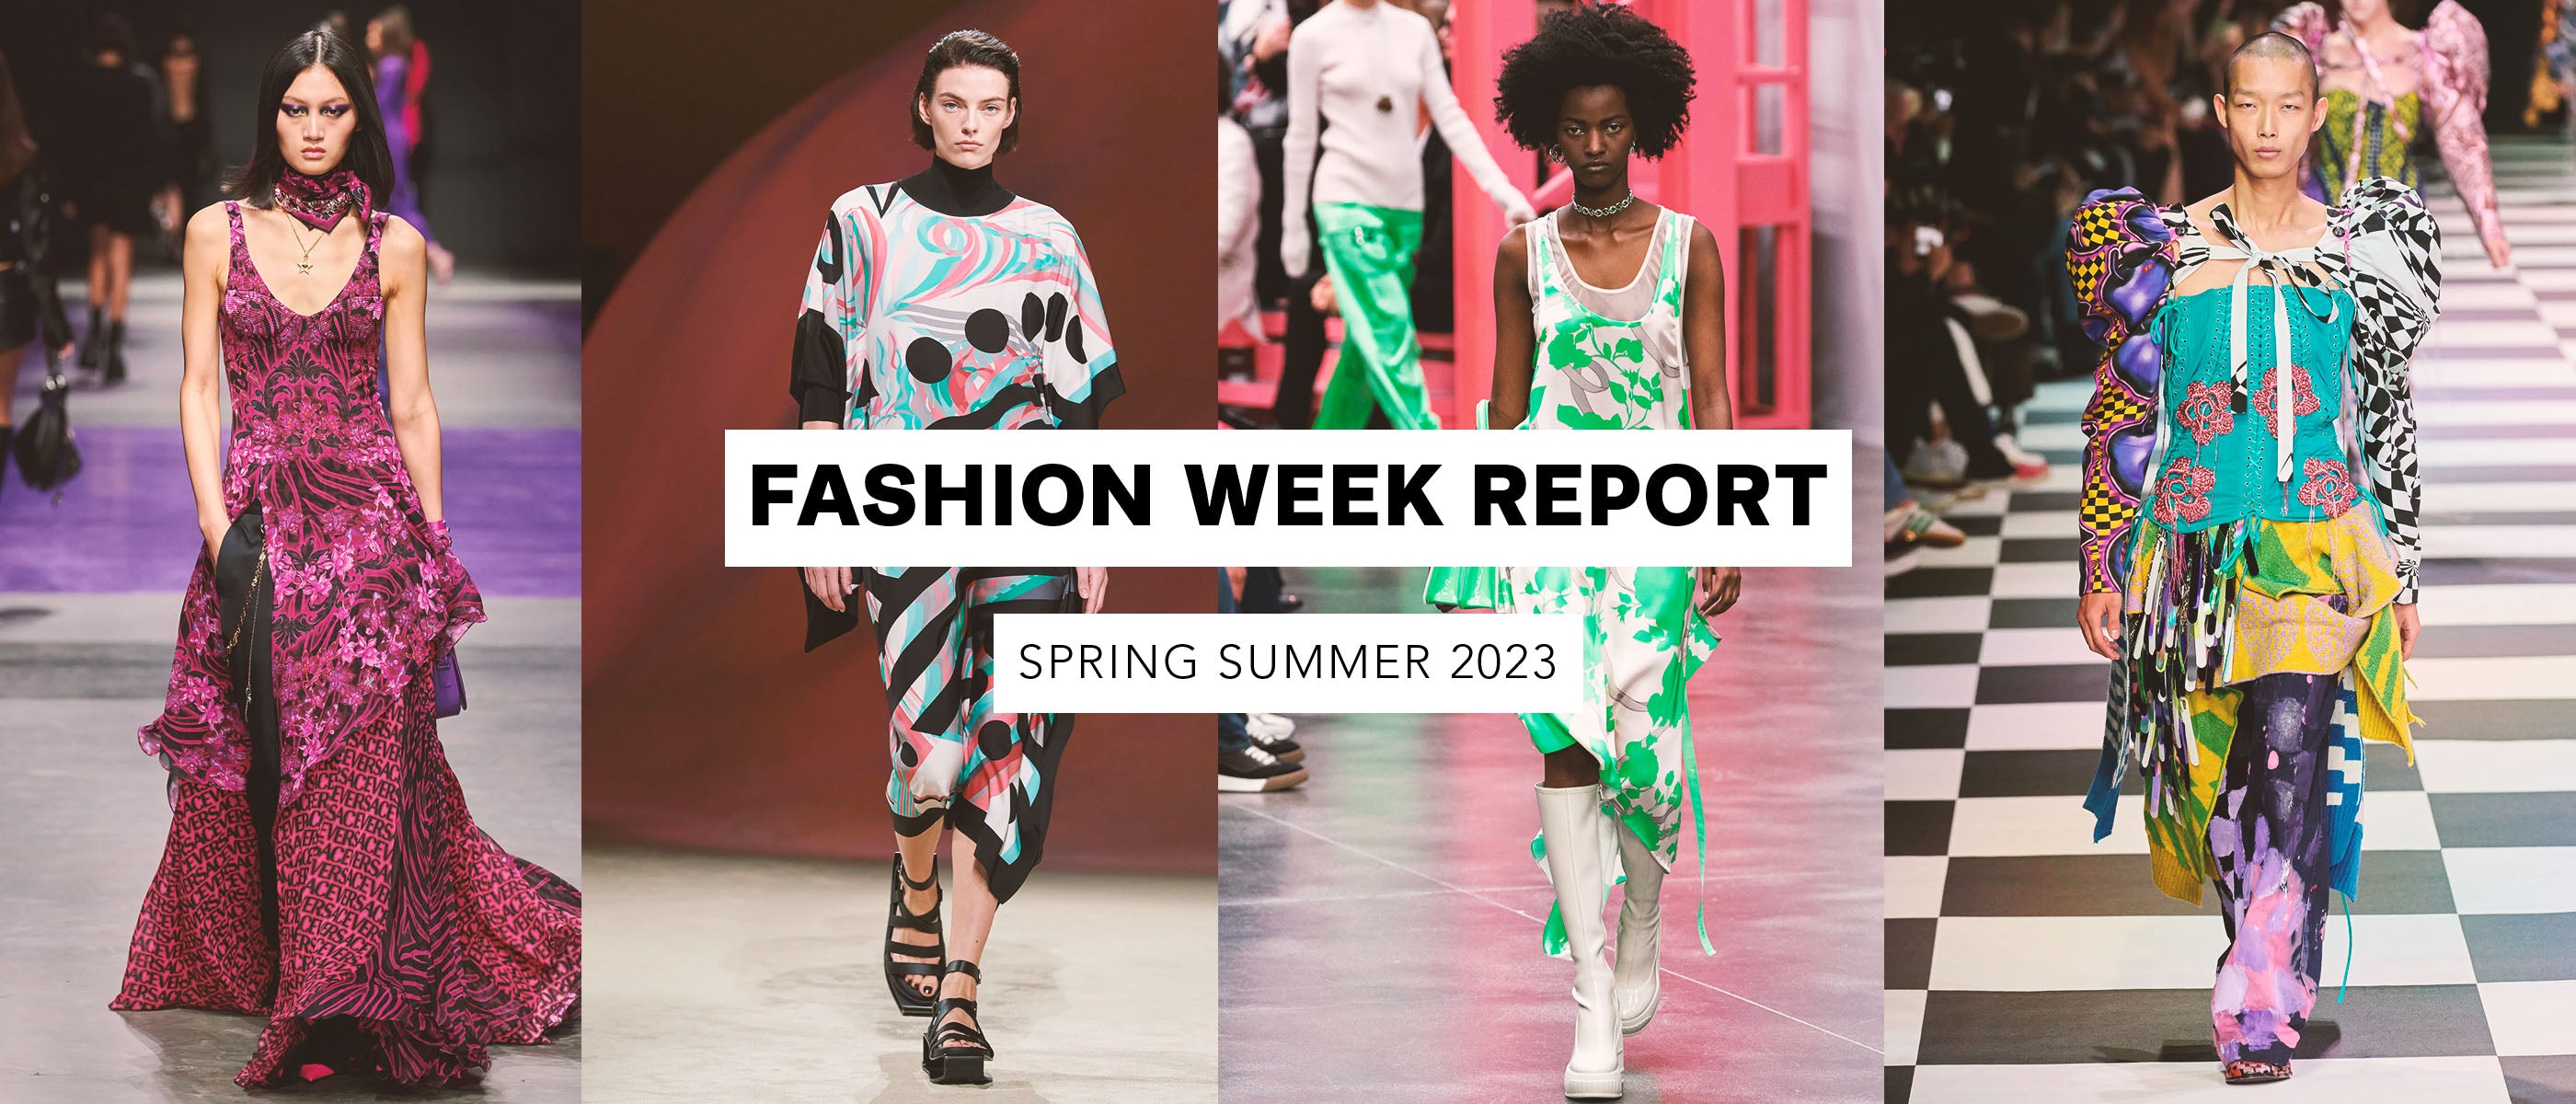 Spring 2021 Trends From Milan Fashion Week Runways